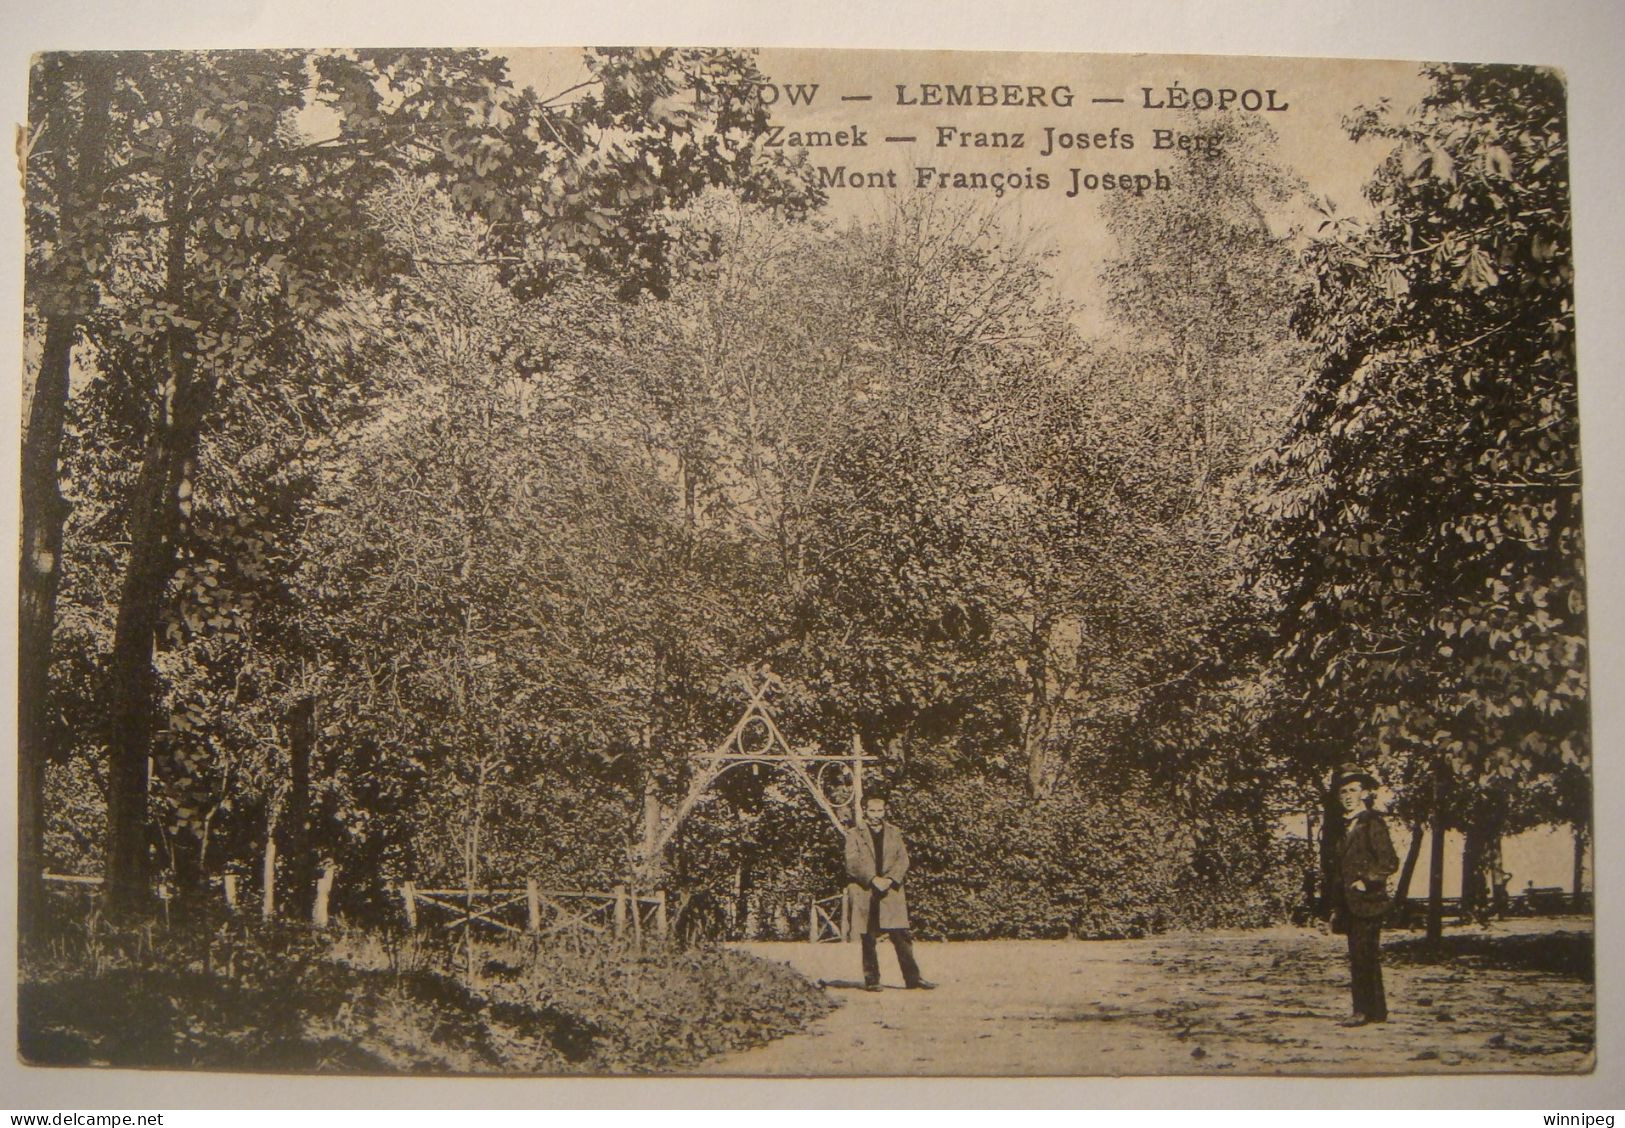 Lwow.Lemberg.Zamek.Franz Josefs Burg.DG.1909.Poland.Ukraine. - Ukraine